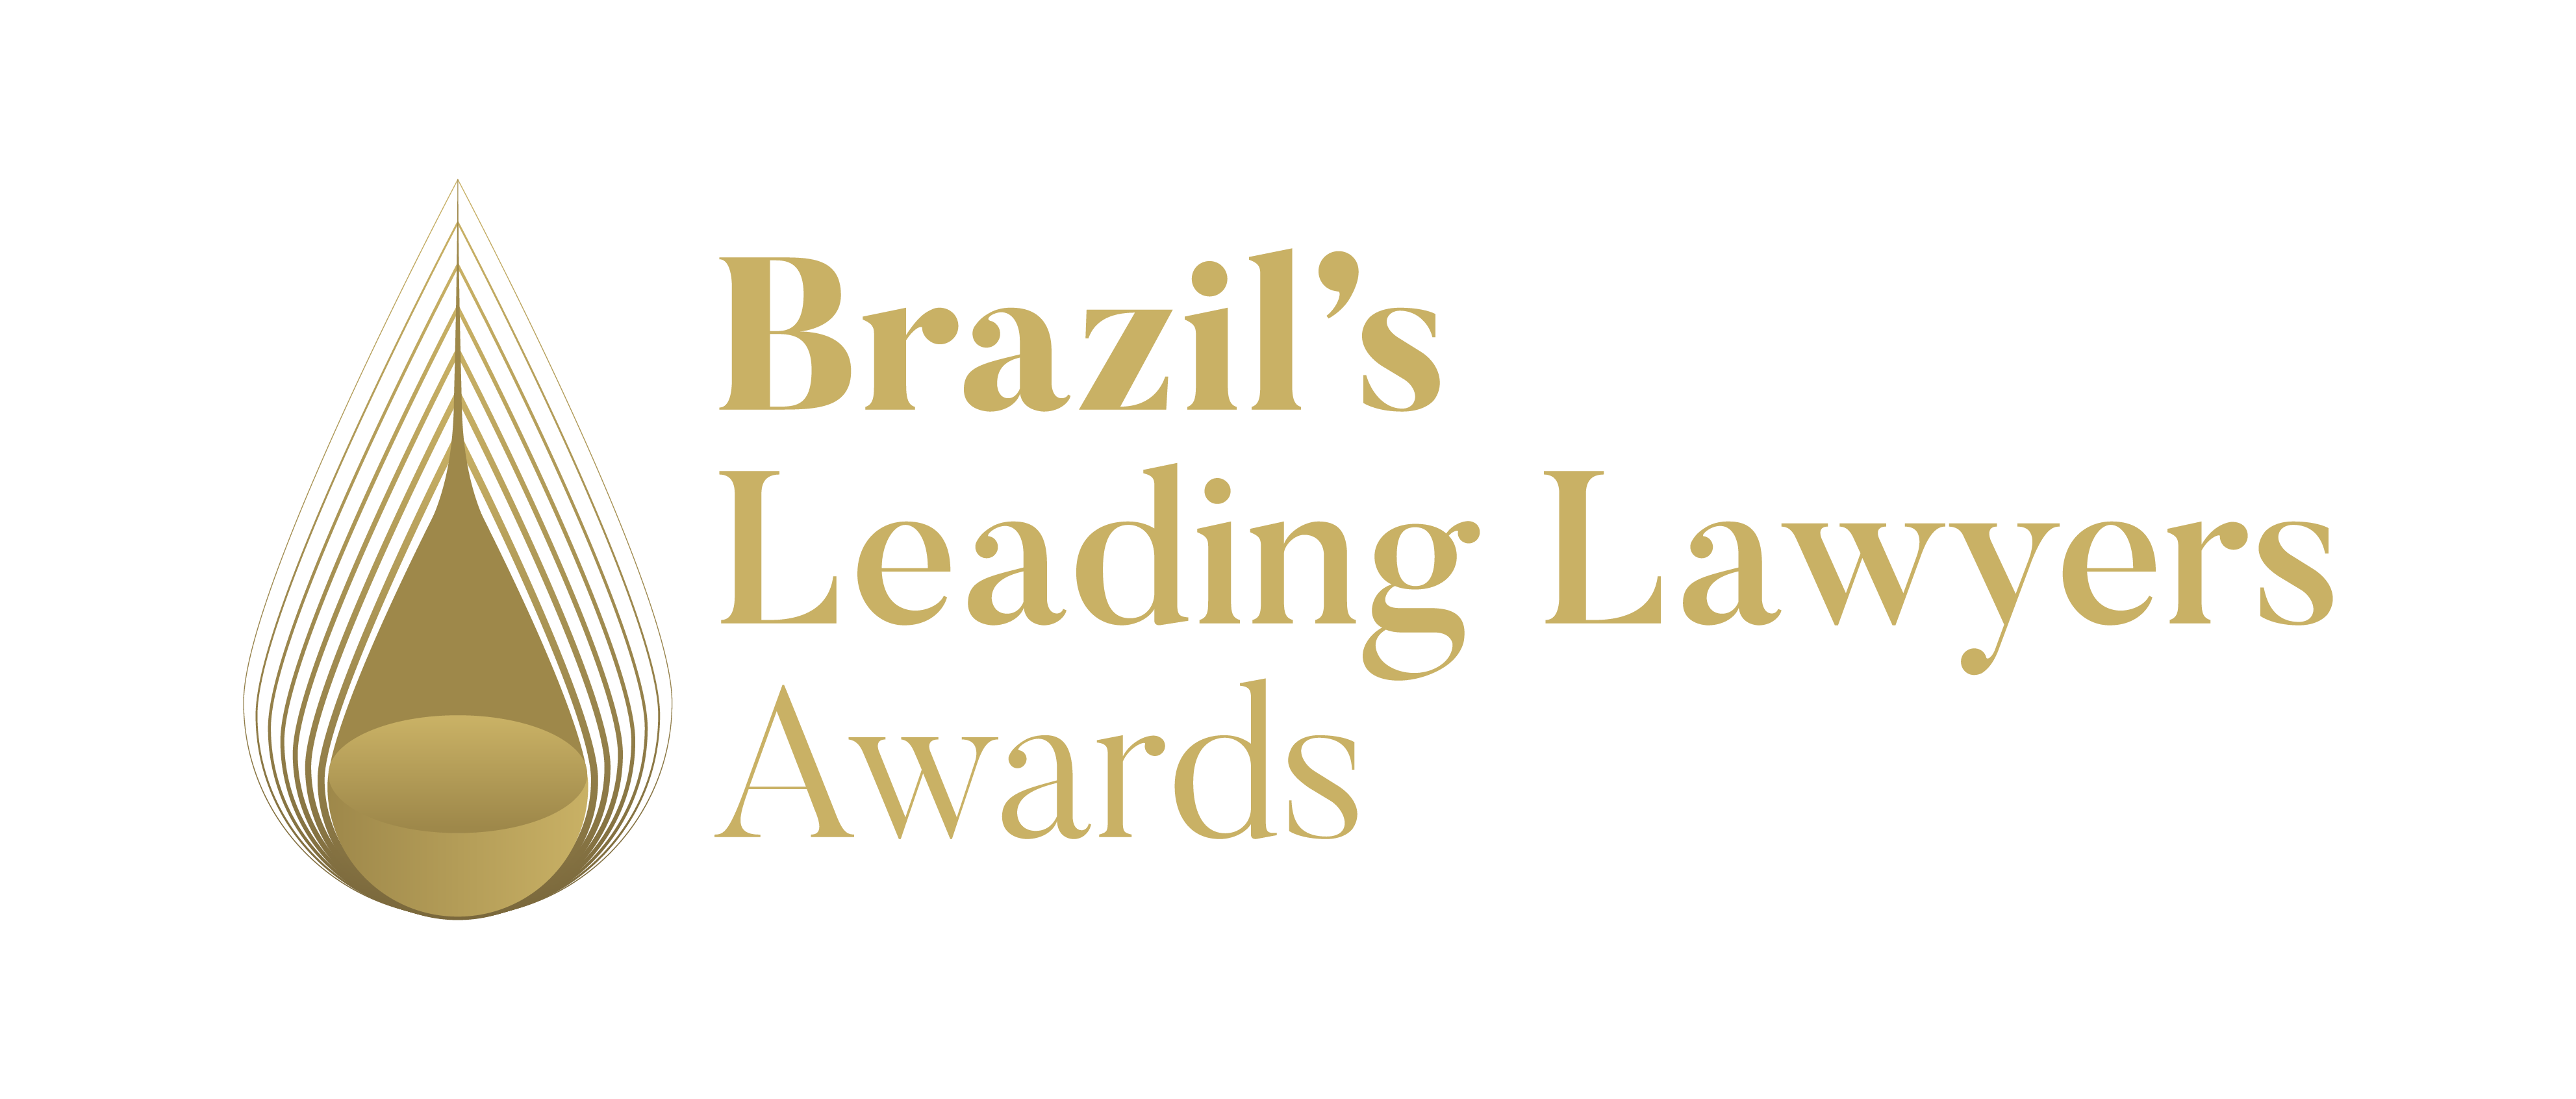 Brazil's Leading Lawyers Awards